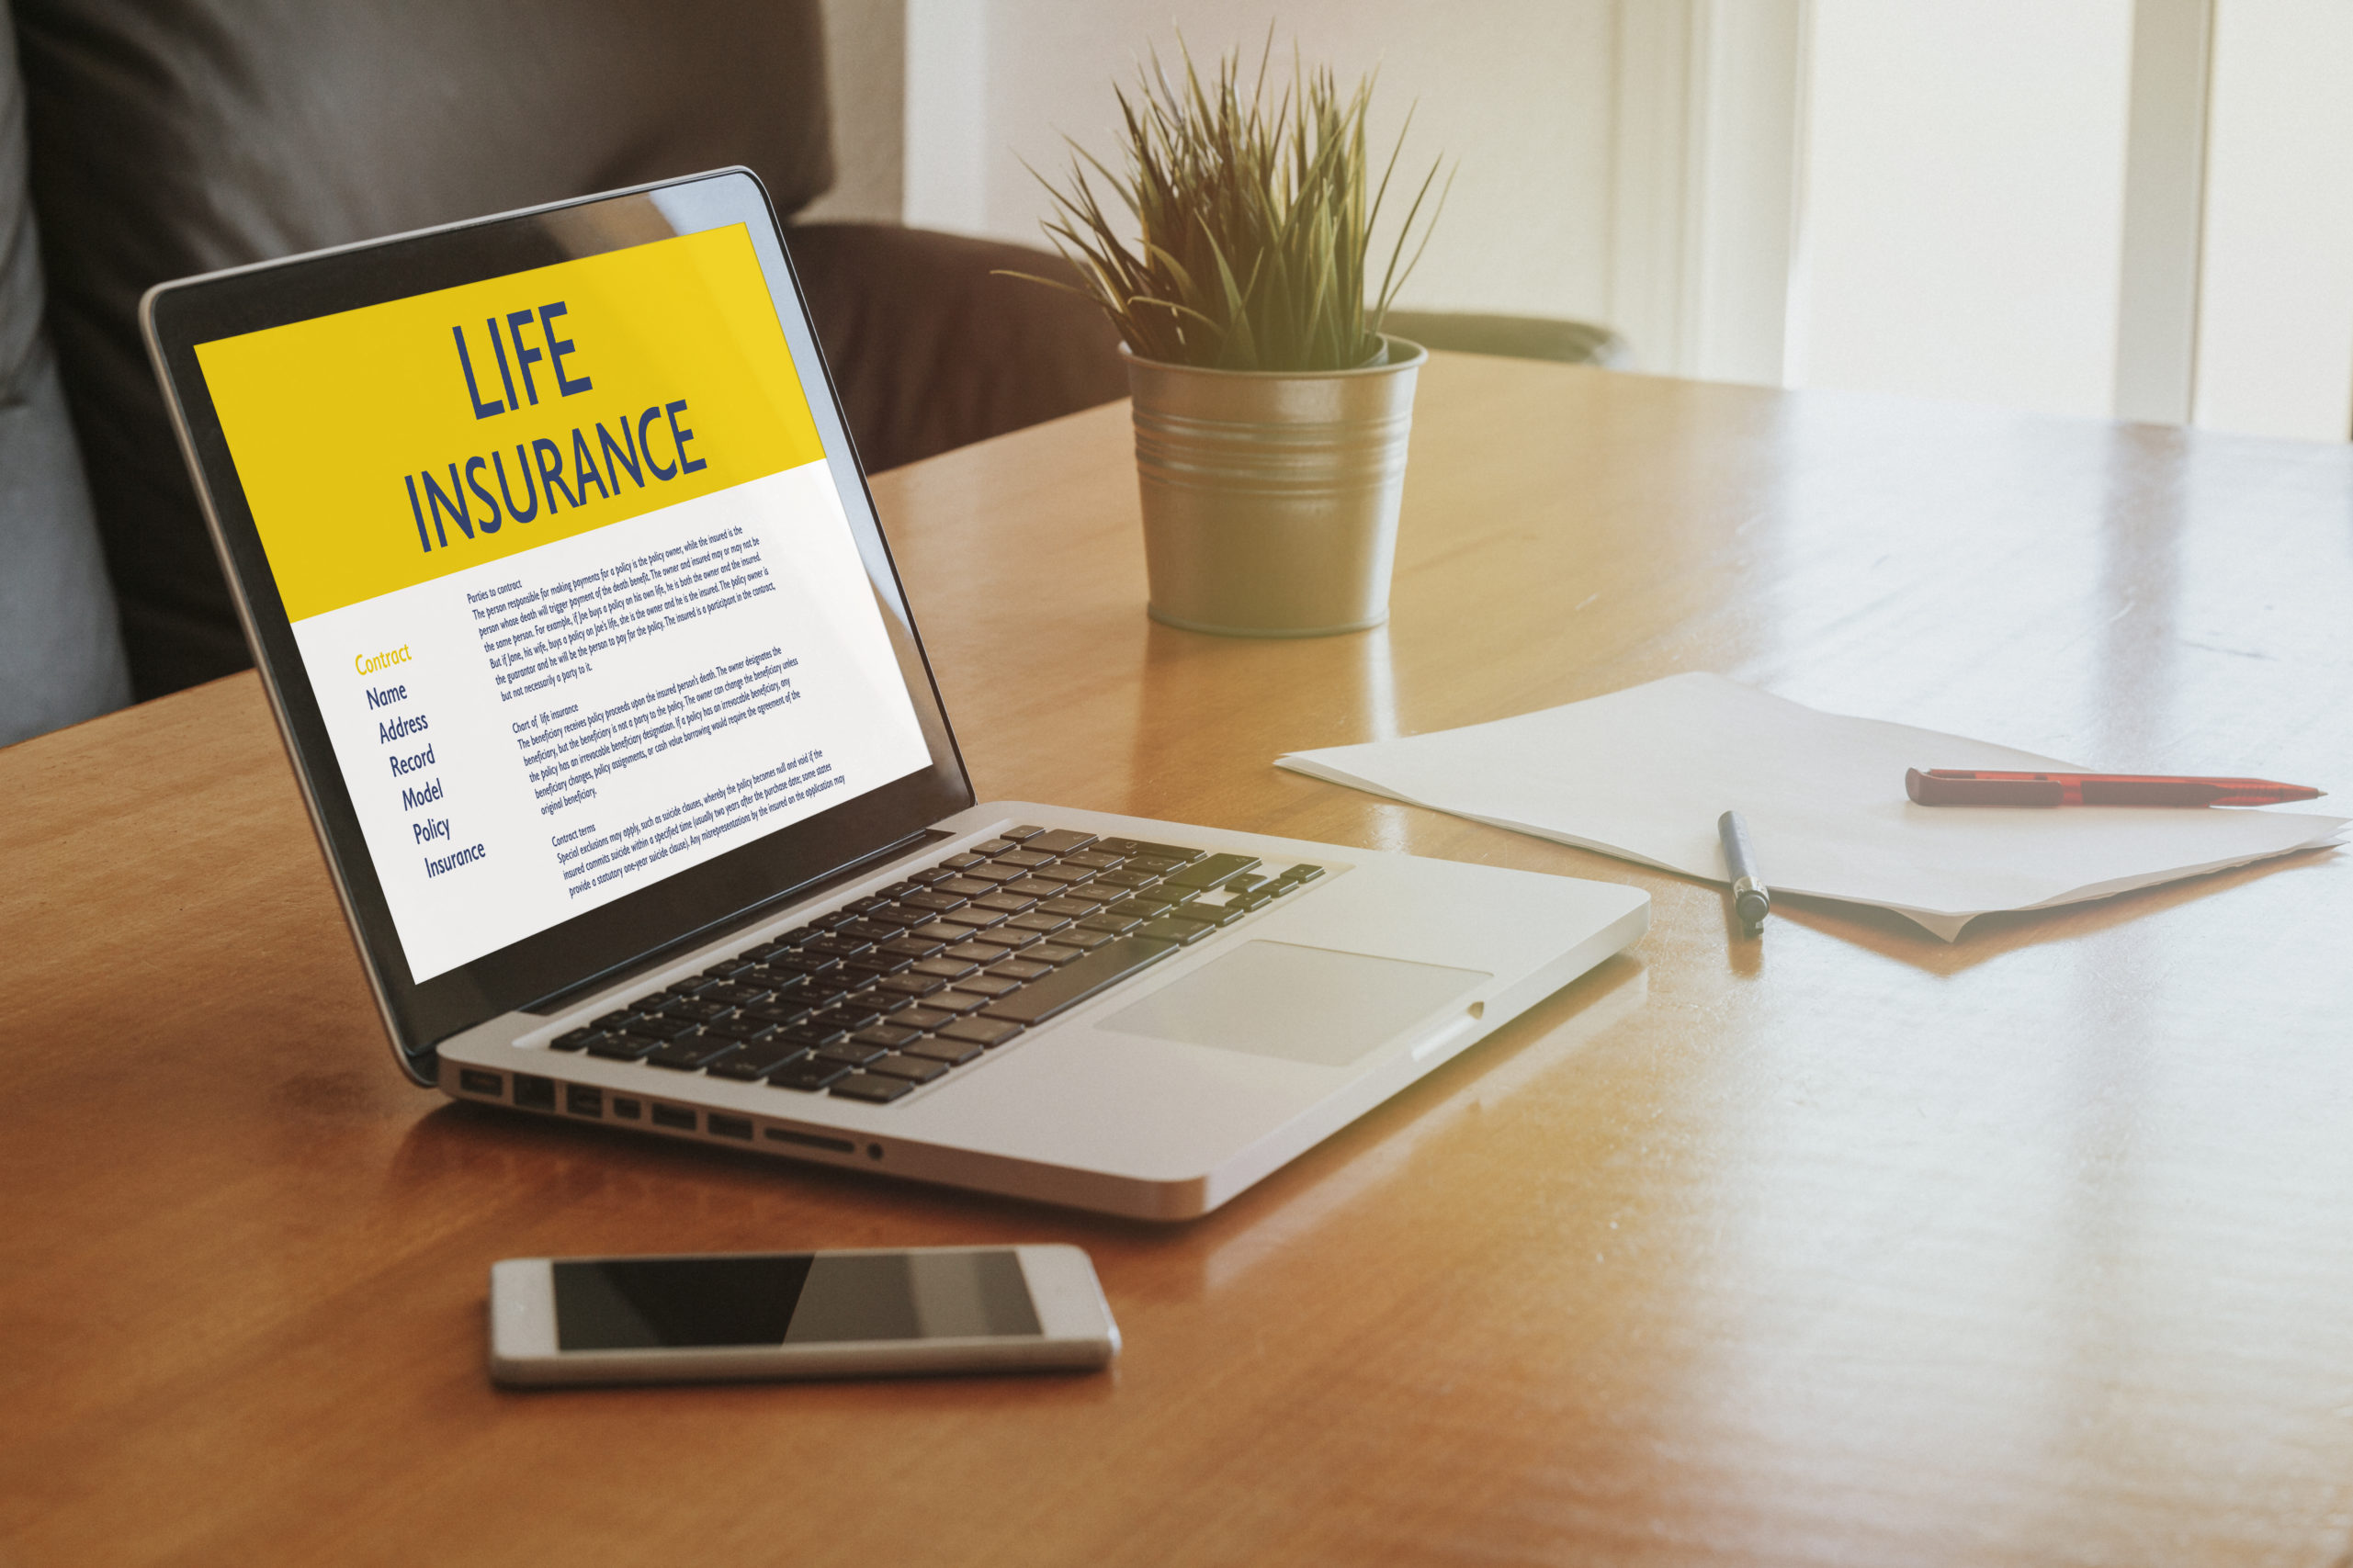 Life insurance options